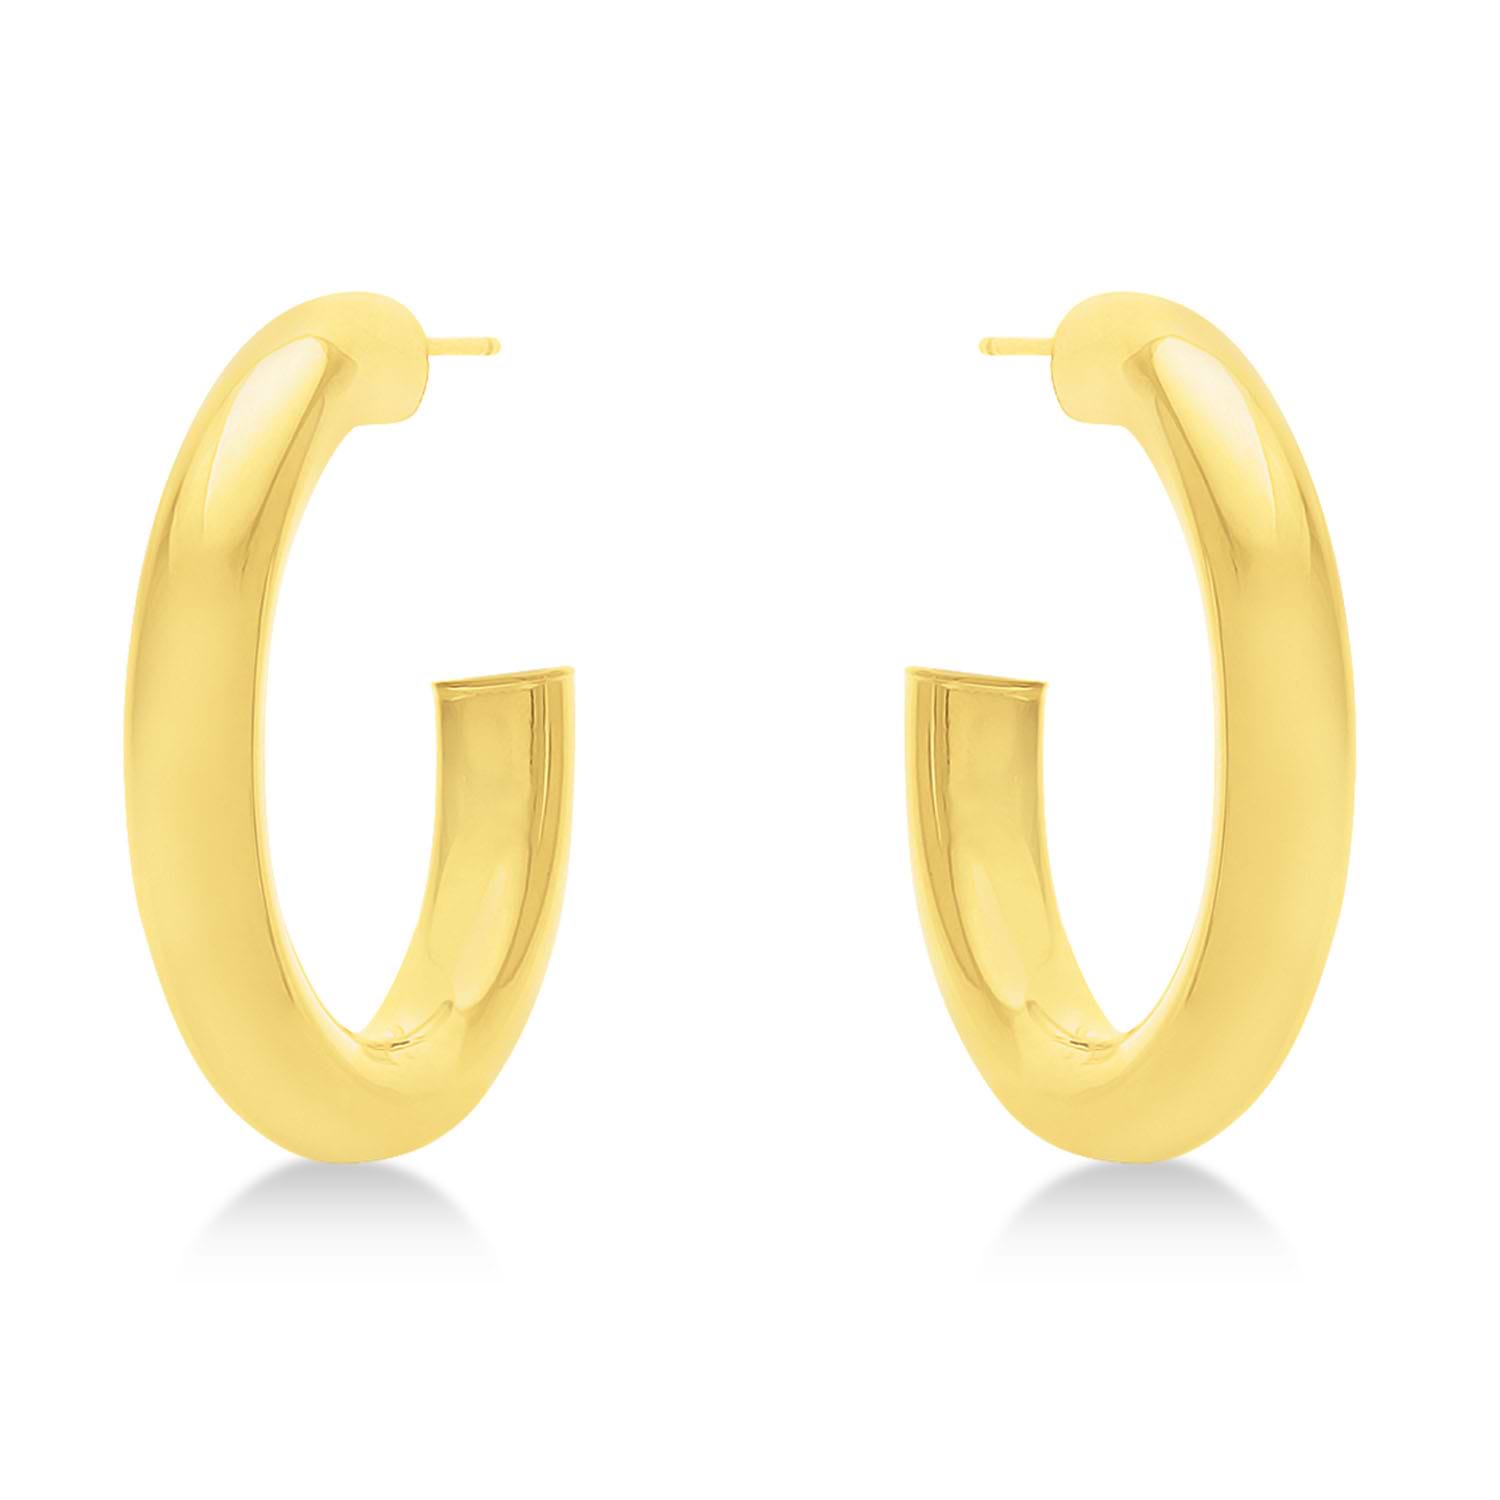 Medium Open Hoop Earrings 14k Yellow Gold